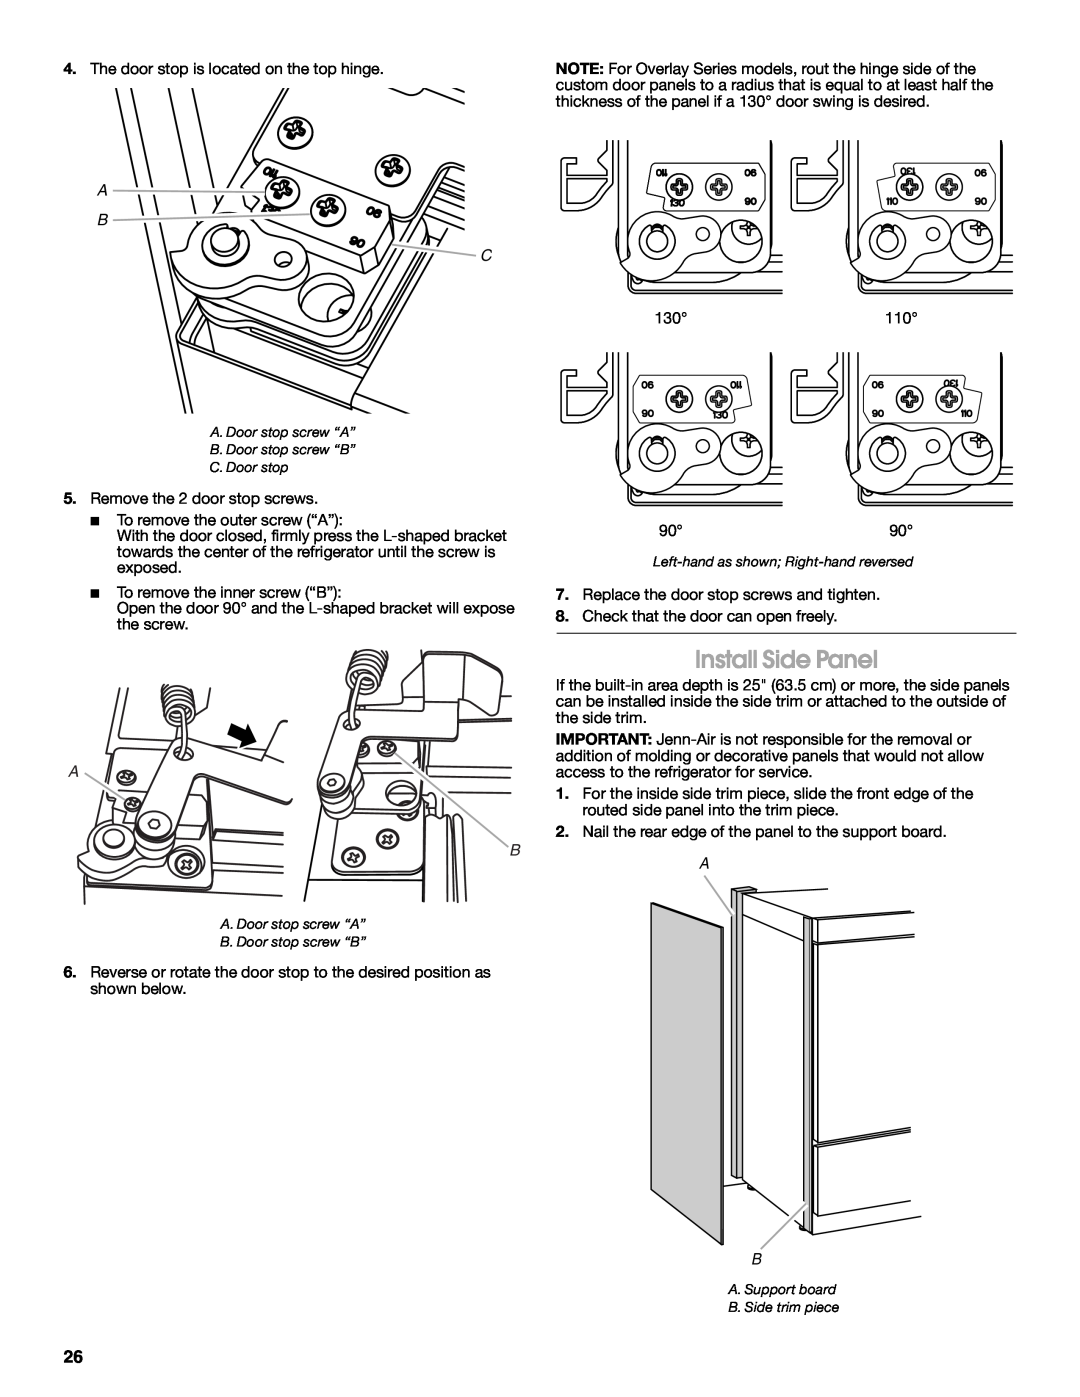 Jenn-Air W10183782A manual Install Side Panel, A B C 